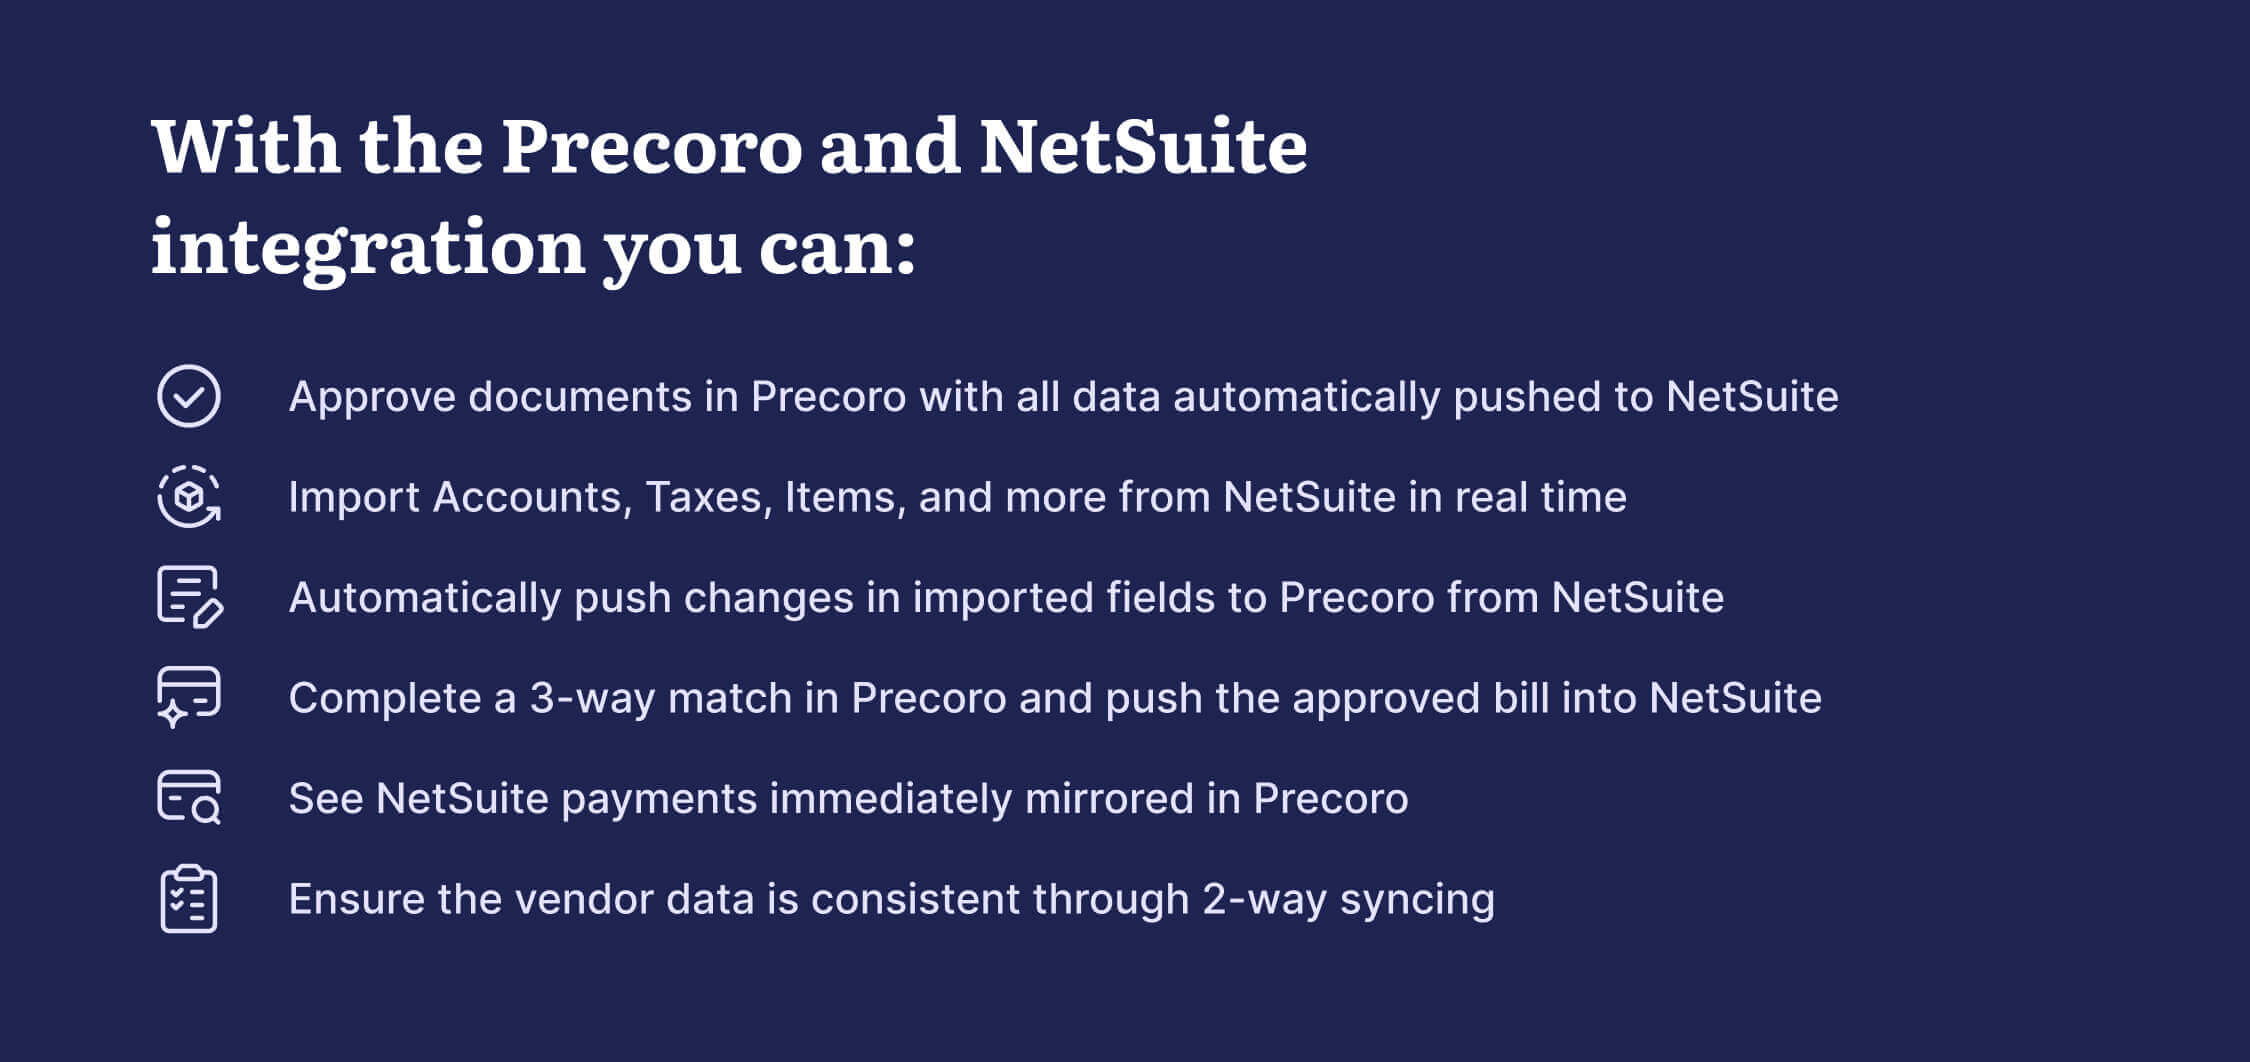 benefits of precoro and netsuite integration